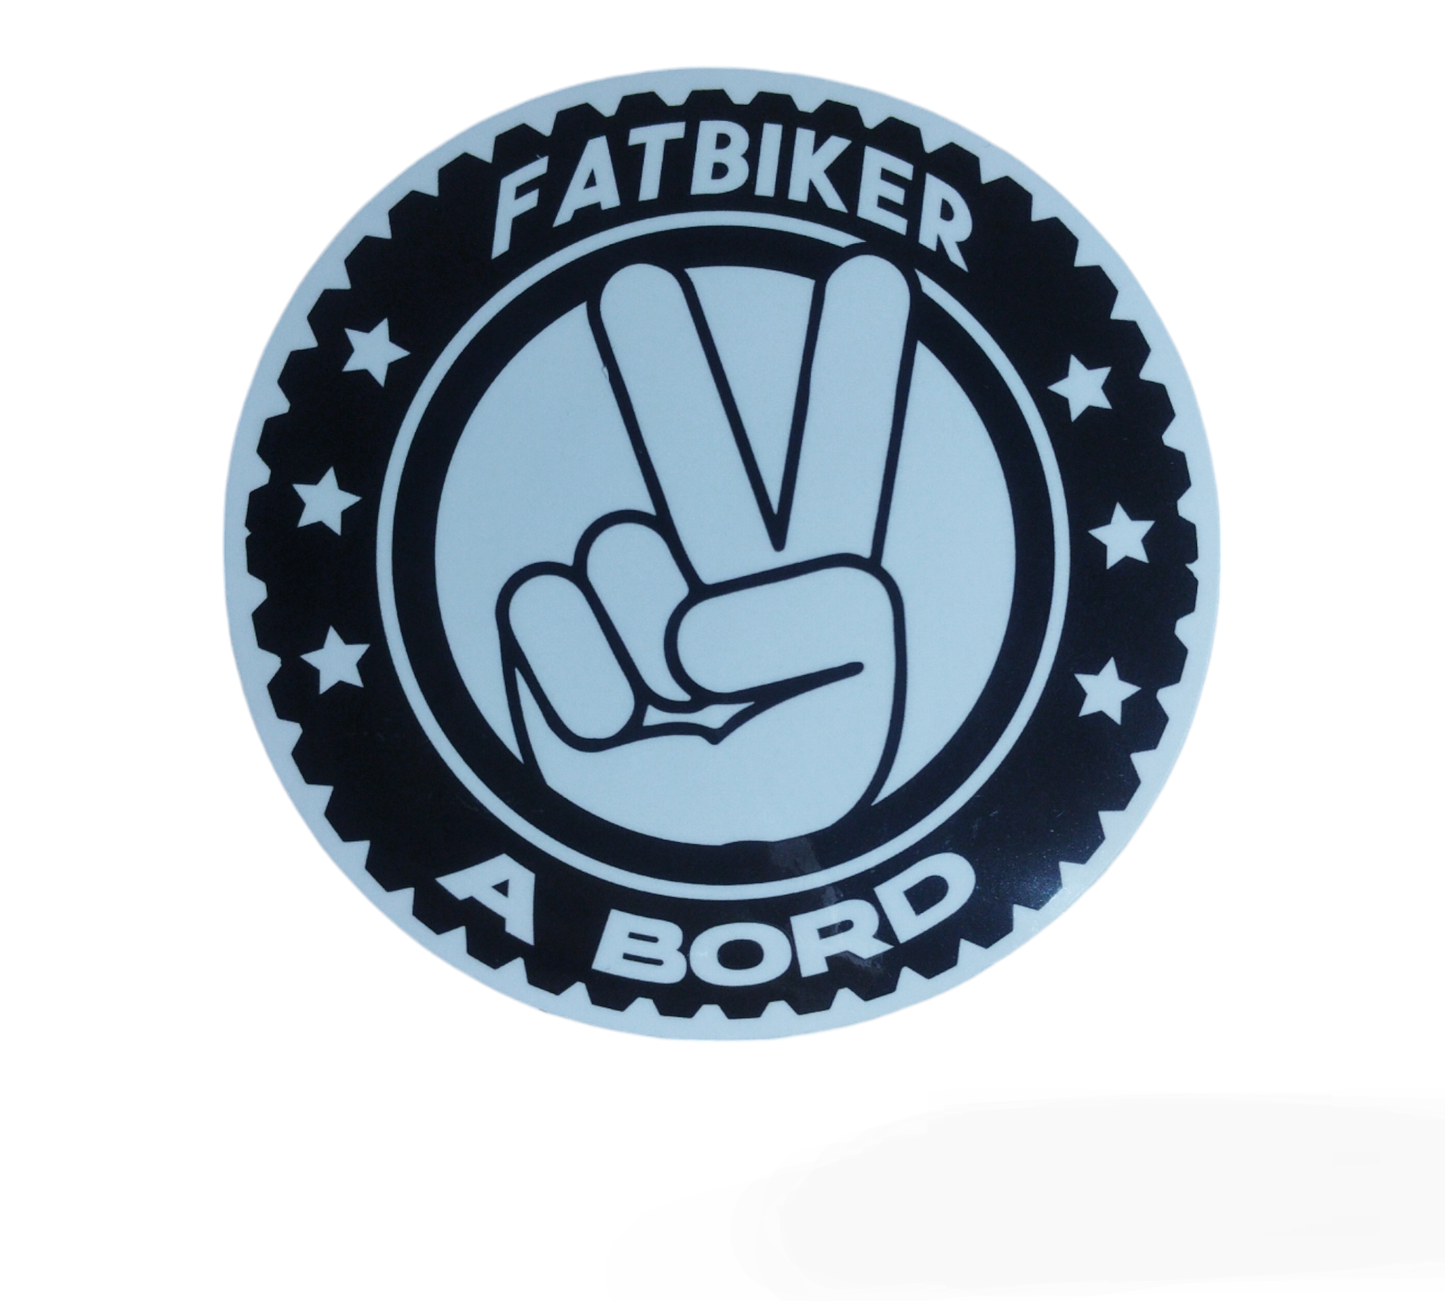 Stickers "Fatbiker à bord" cool